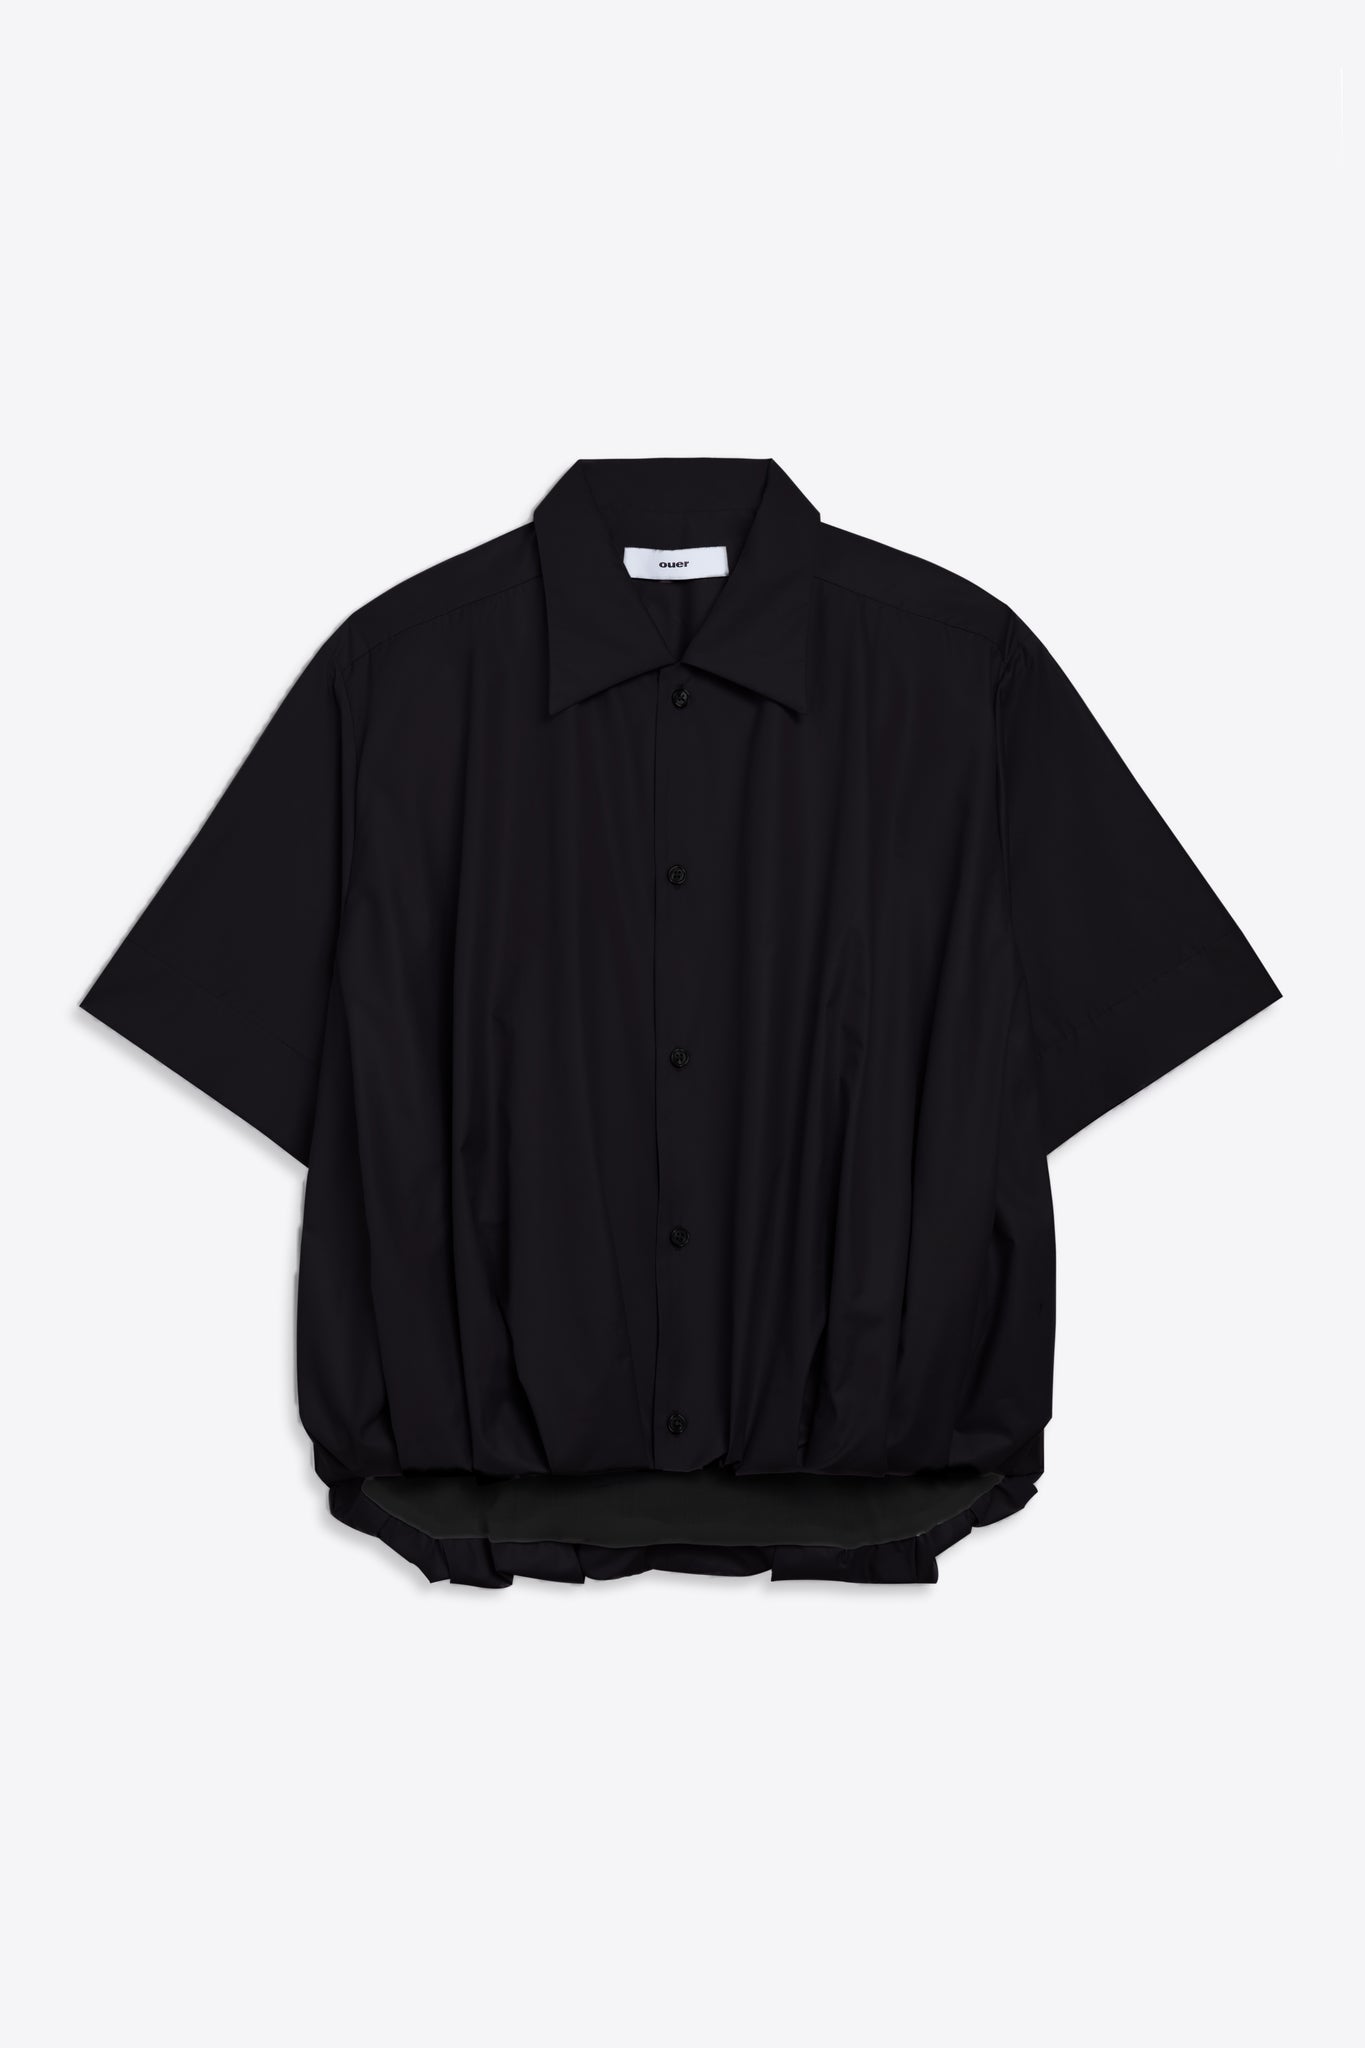 Bubble Shirt in Black